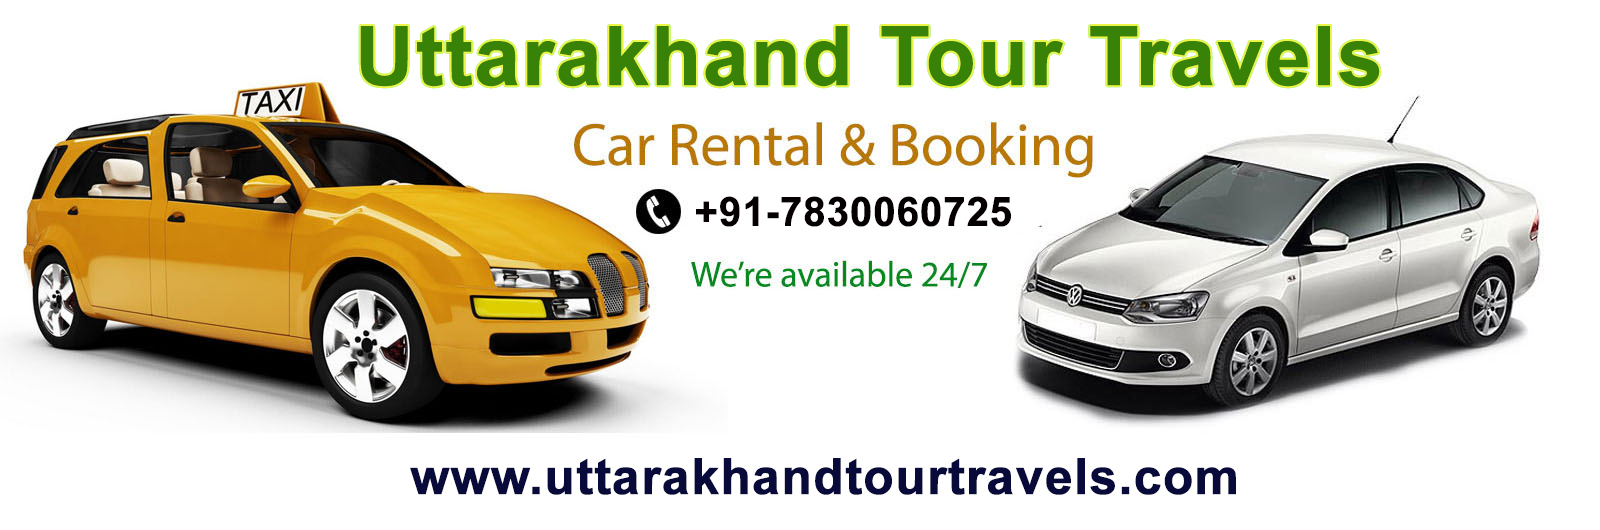 uttarakhand tourism taxi service